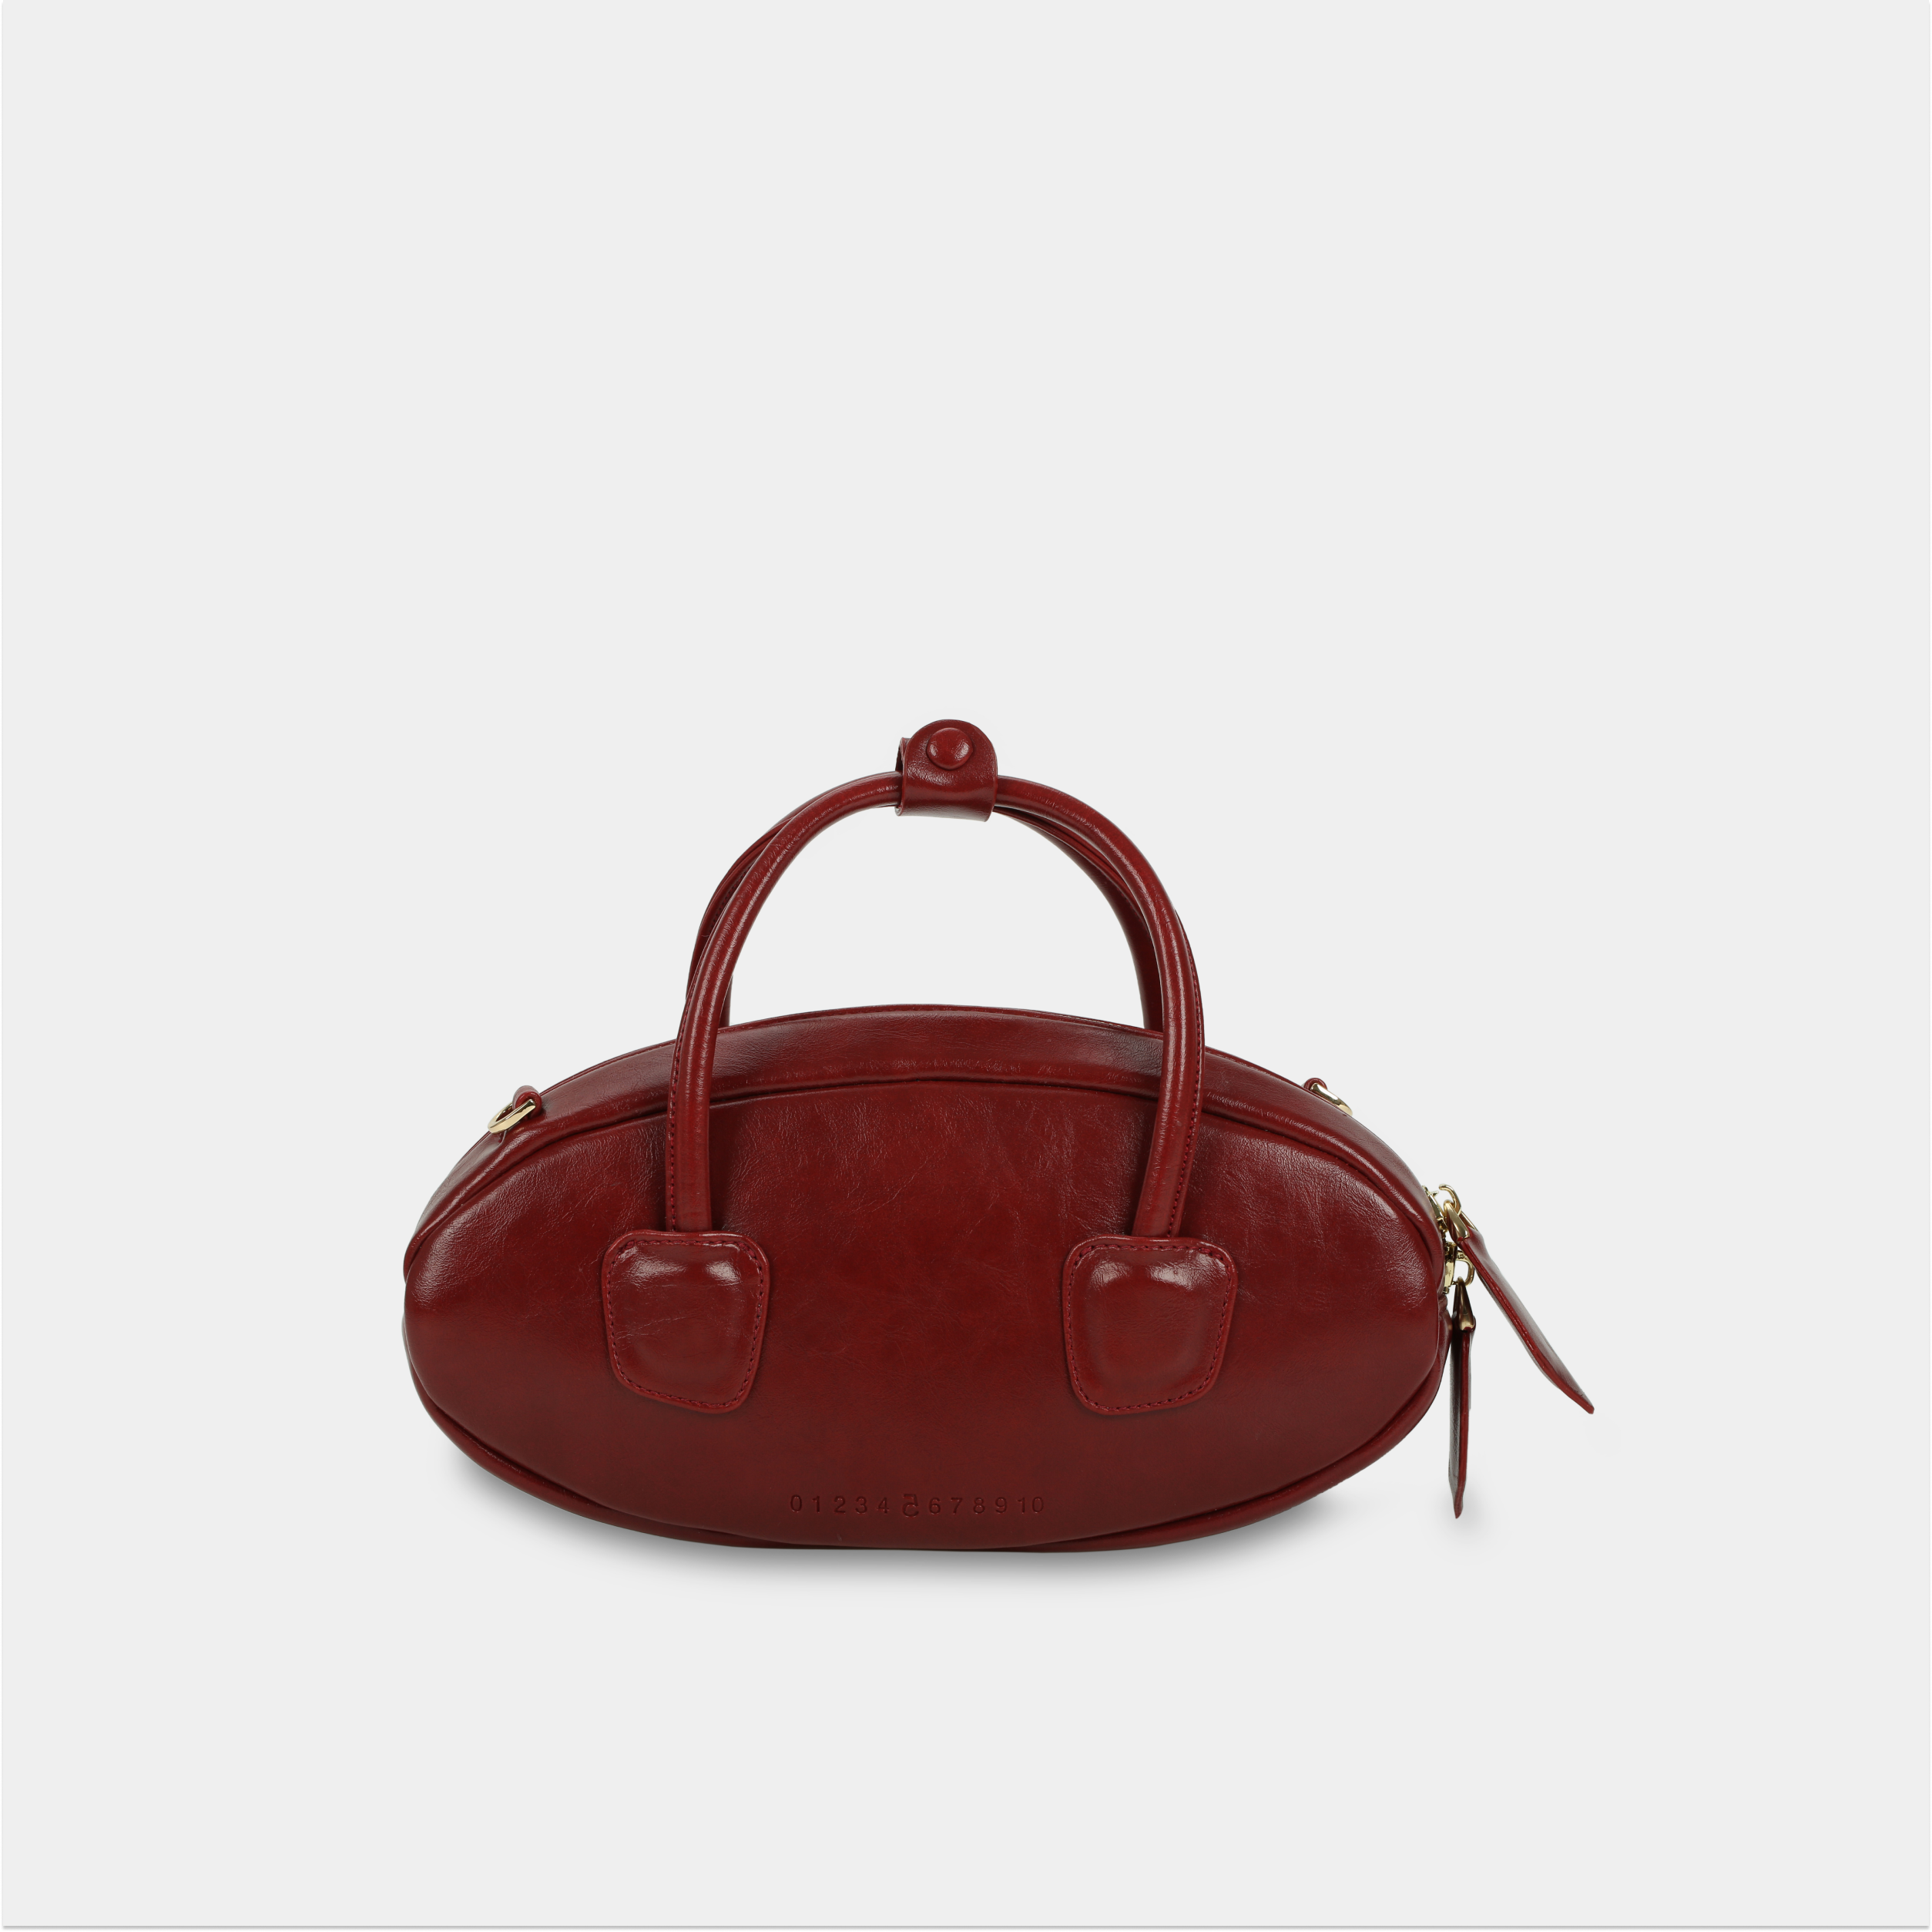 Red EGG handbag